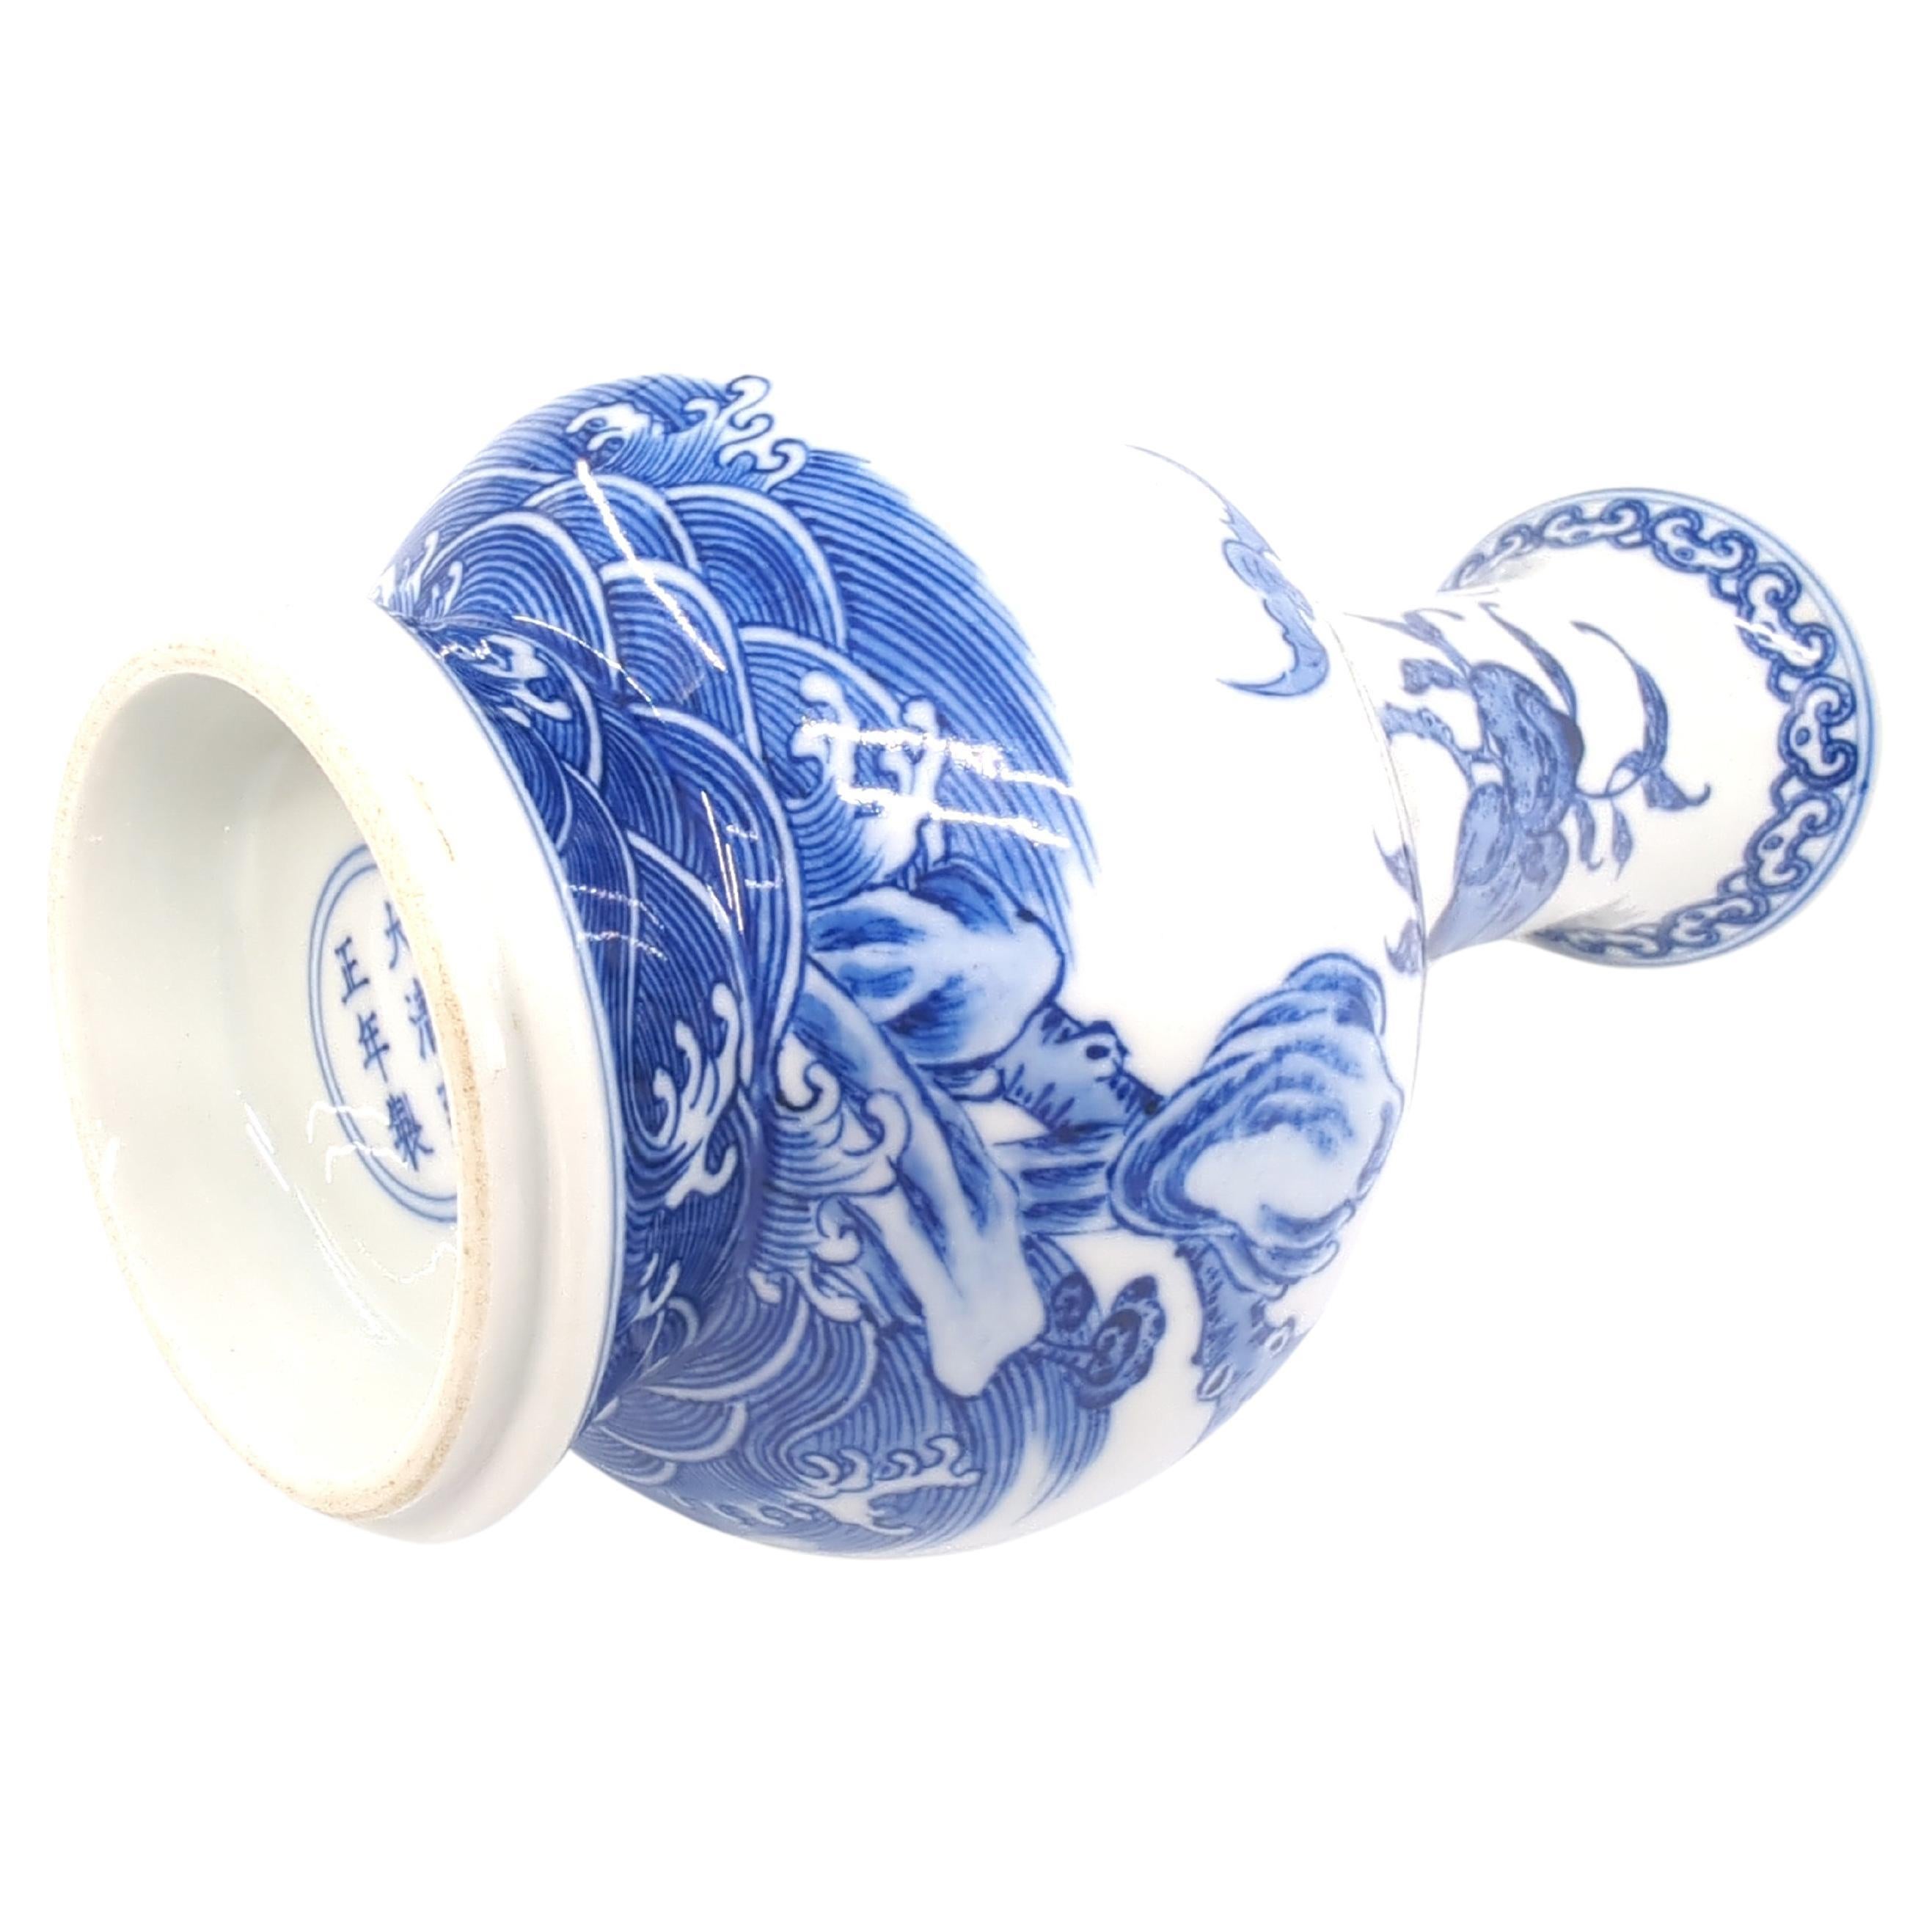 Qing Fine Chinese Porcelain Underglaze Blue White Bats Peaches Bottle Vase Stand 20c For Sale